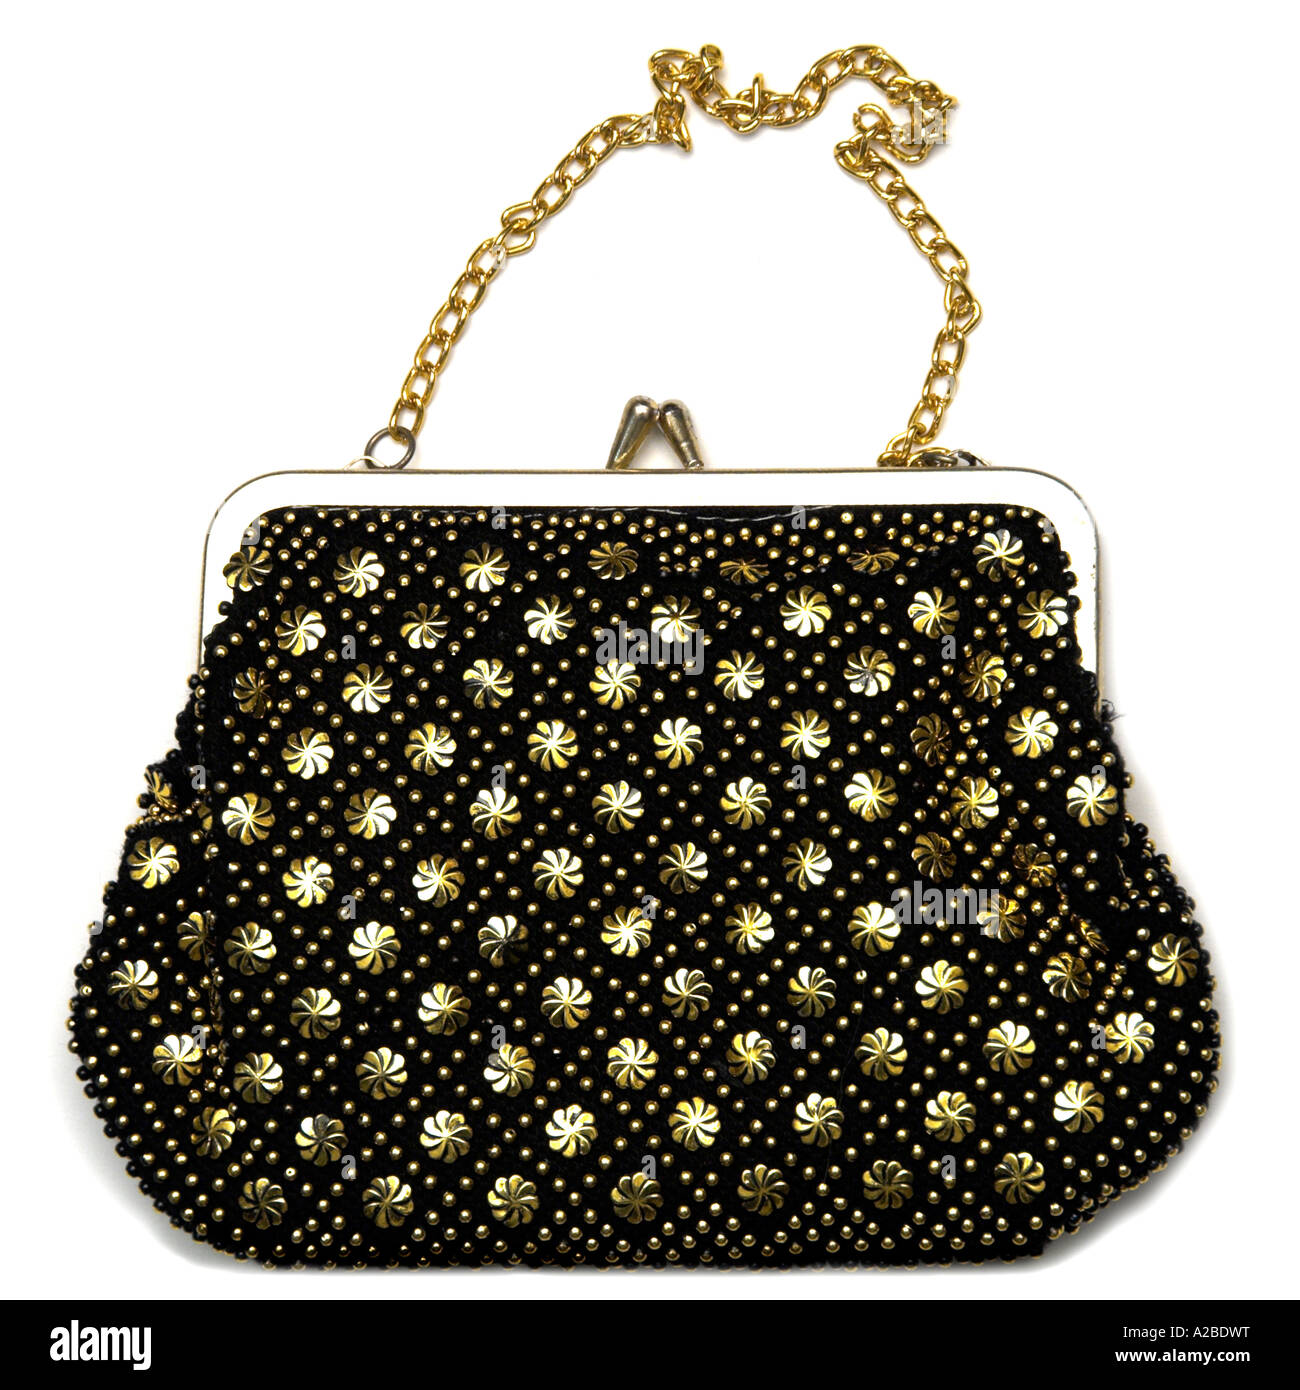 A black and gold coloured handbag Stock Photo